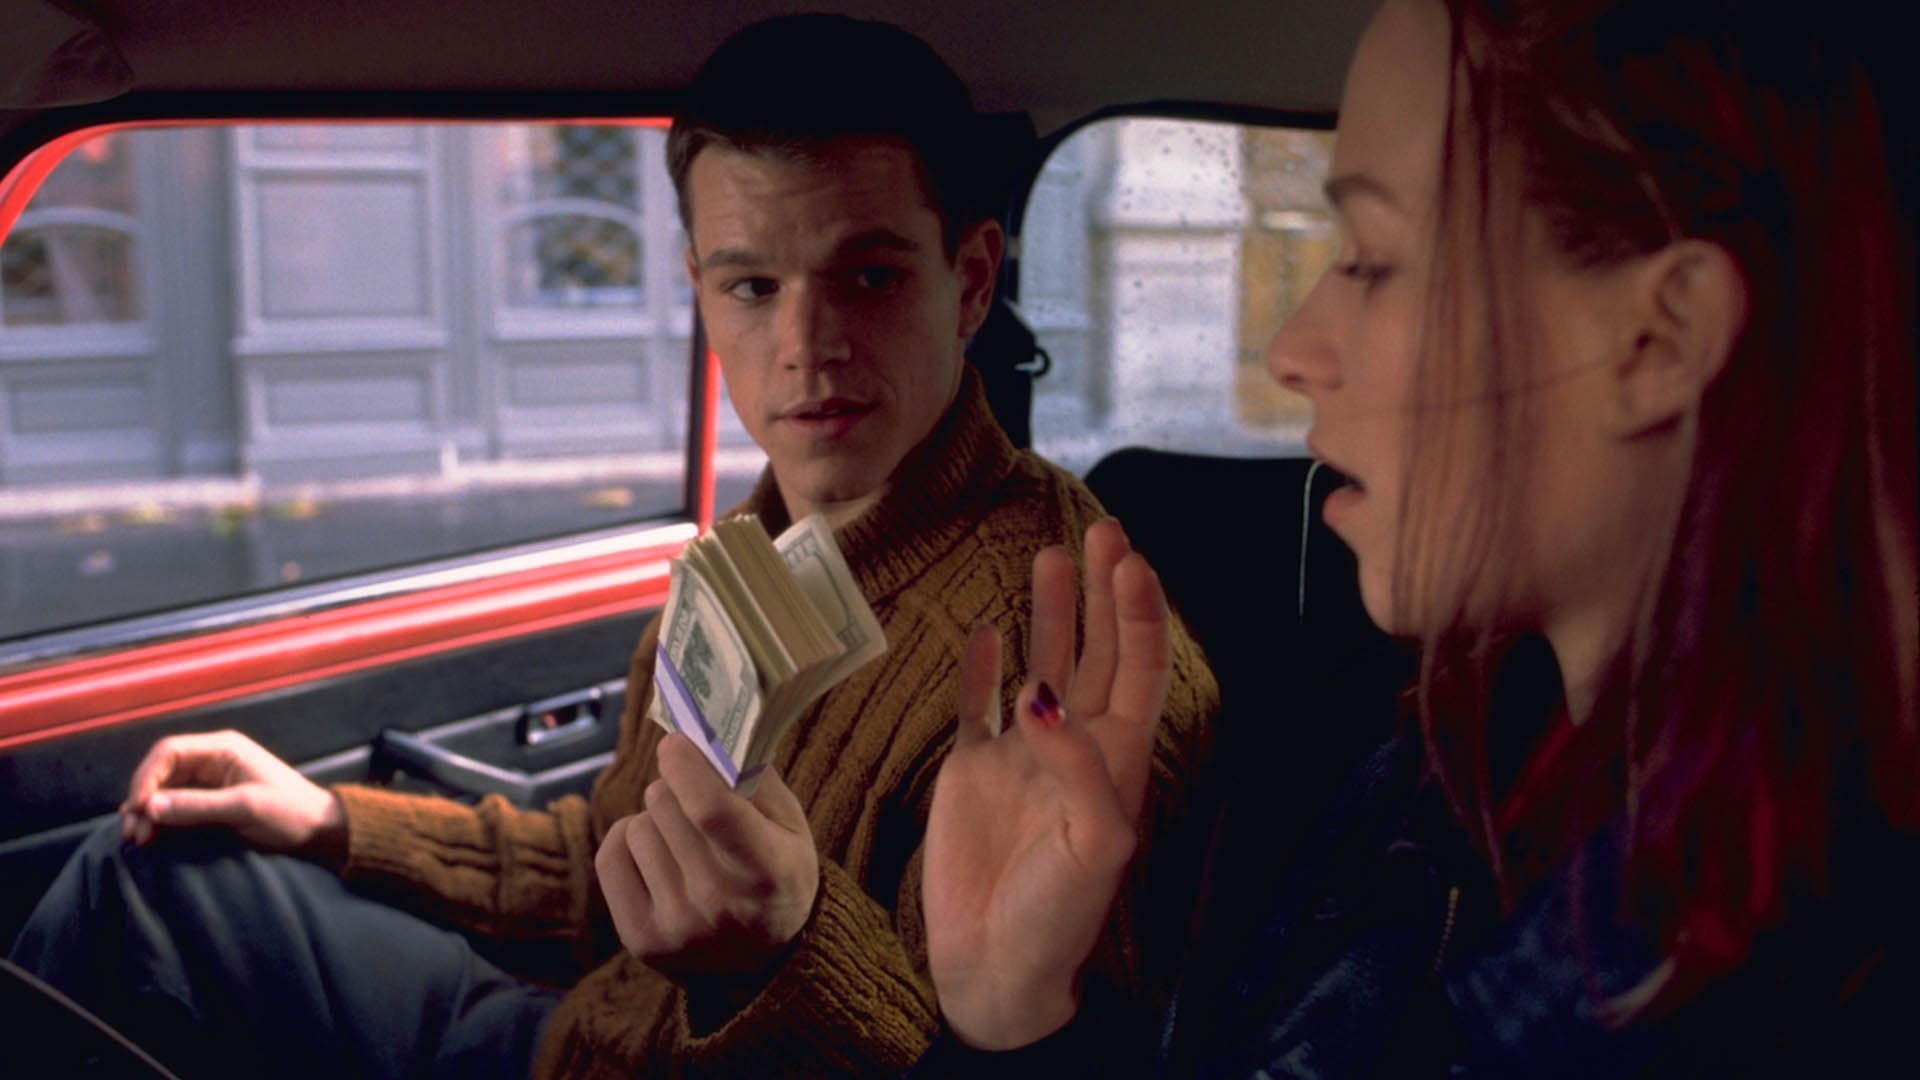 Matt Damon is giving money to Franca Putnte in The Bourne Identity